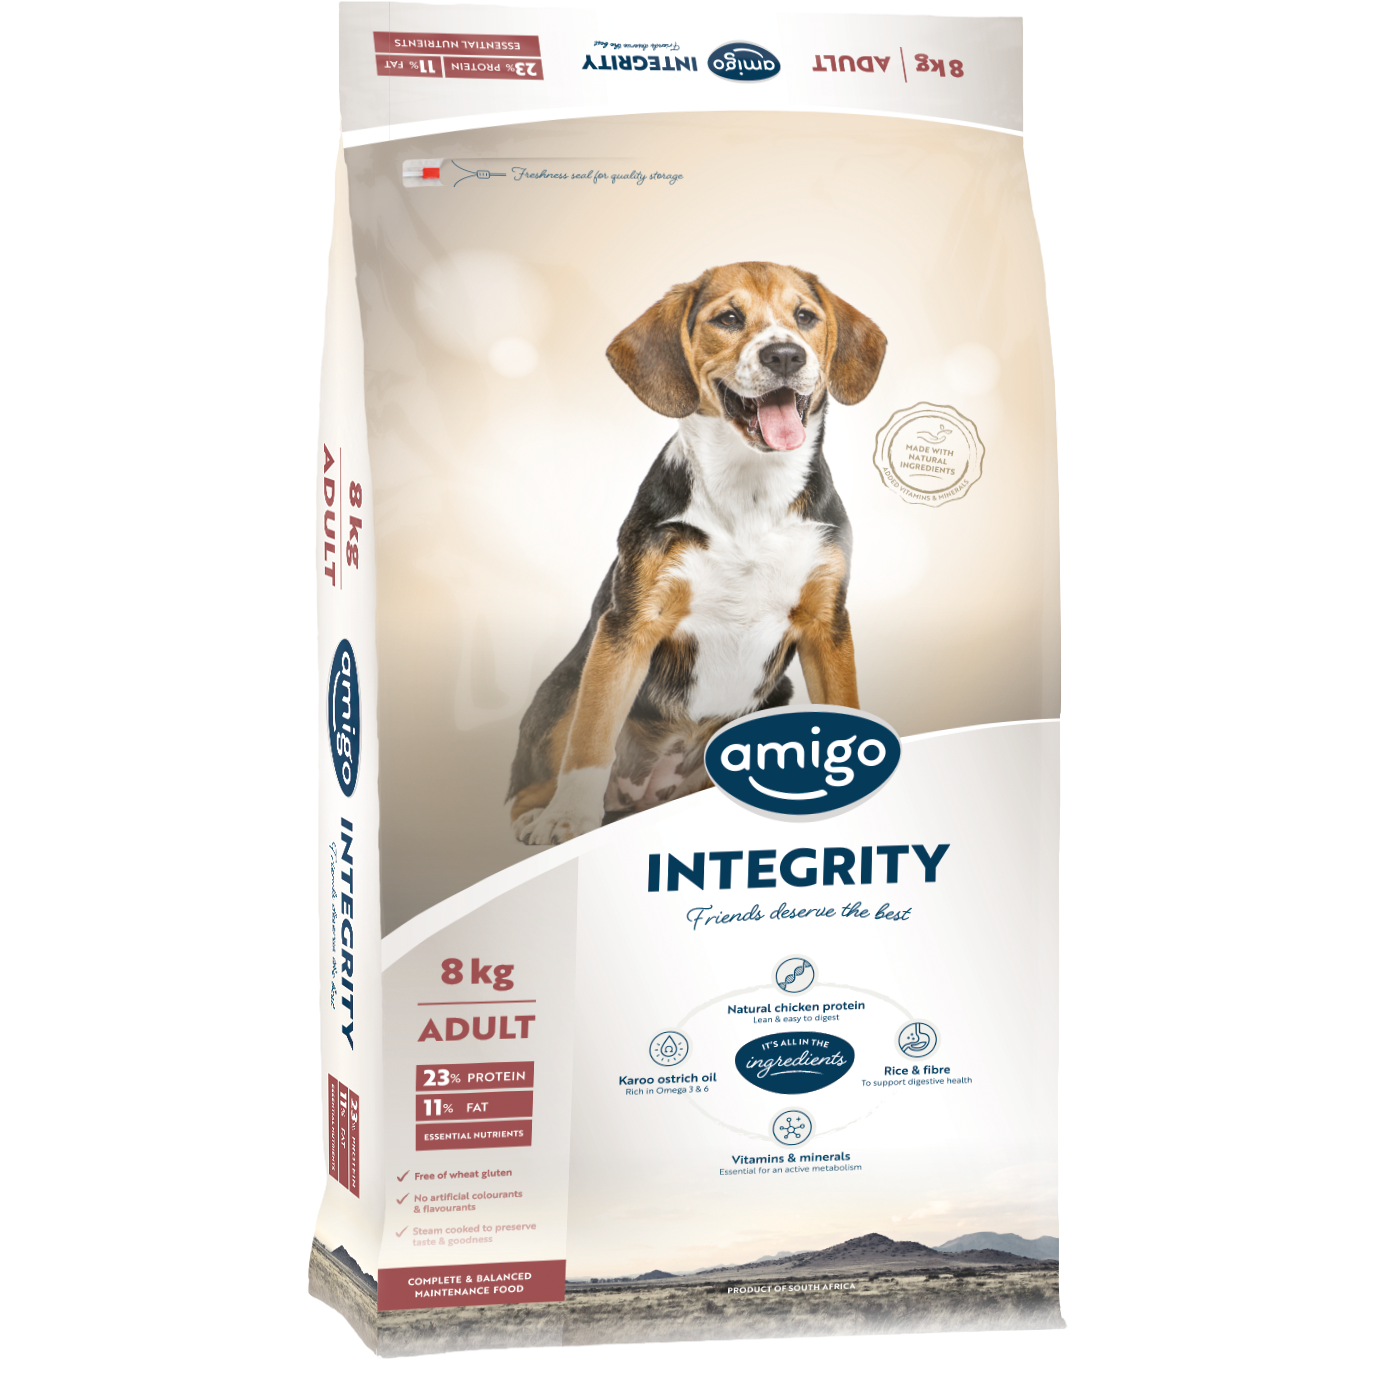 Amigo Integrity Adult Dog Food